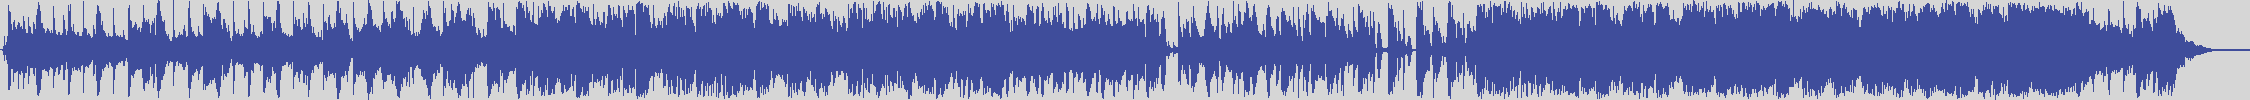 digiphonic_records [DPR014] Valentina Iannone - Liberi [Original Mix] audio wave form